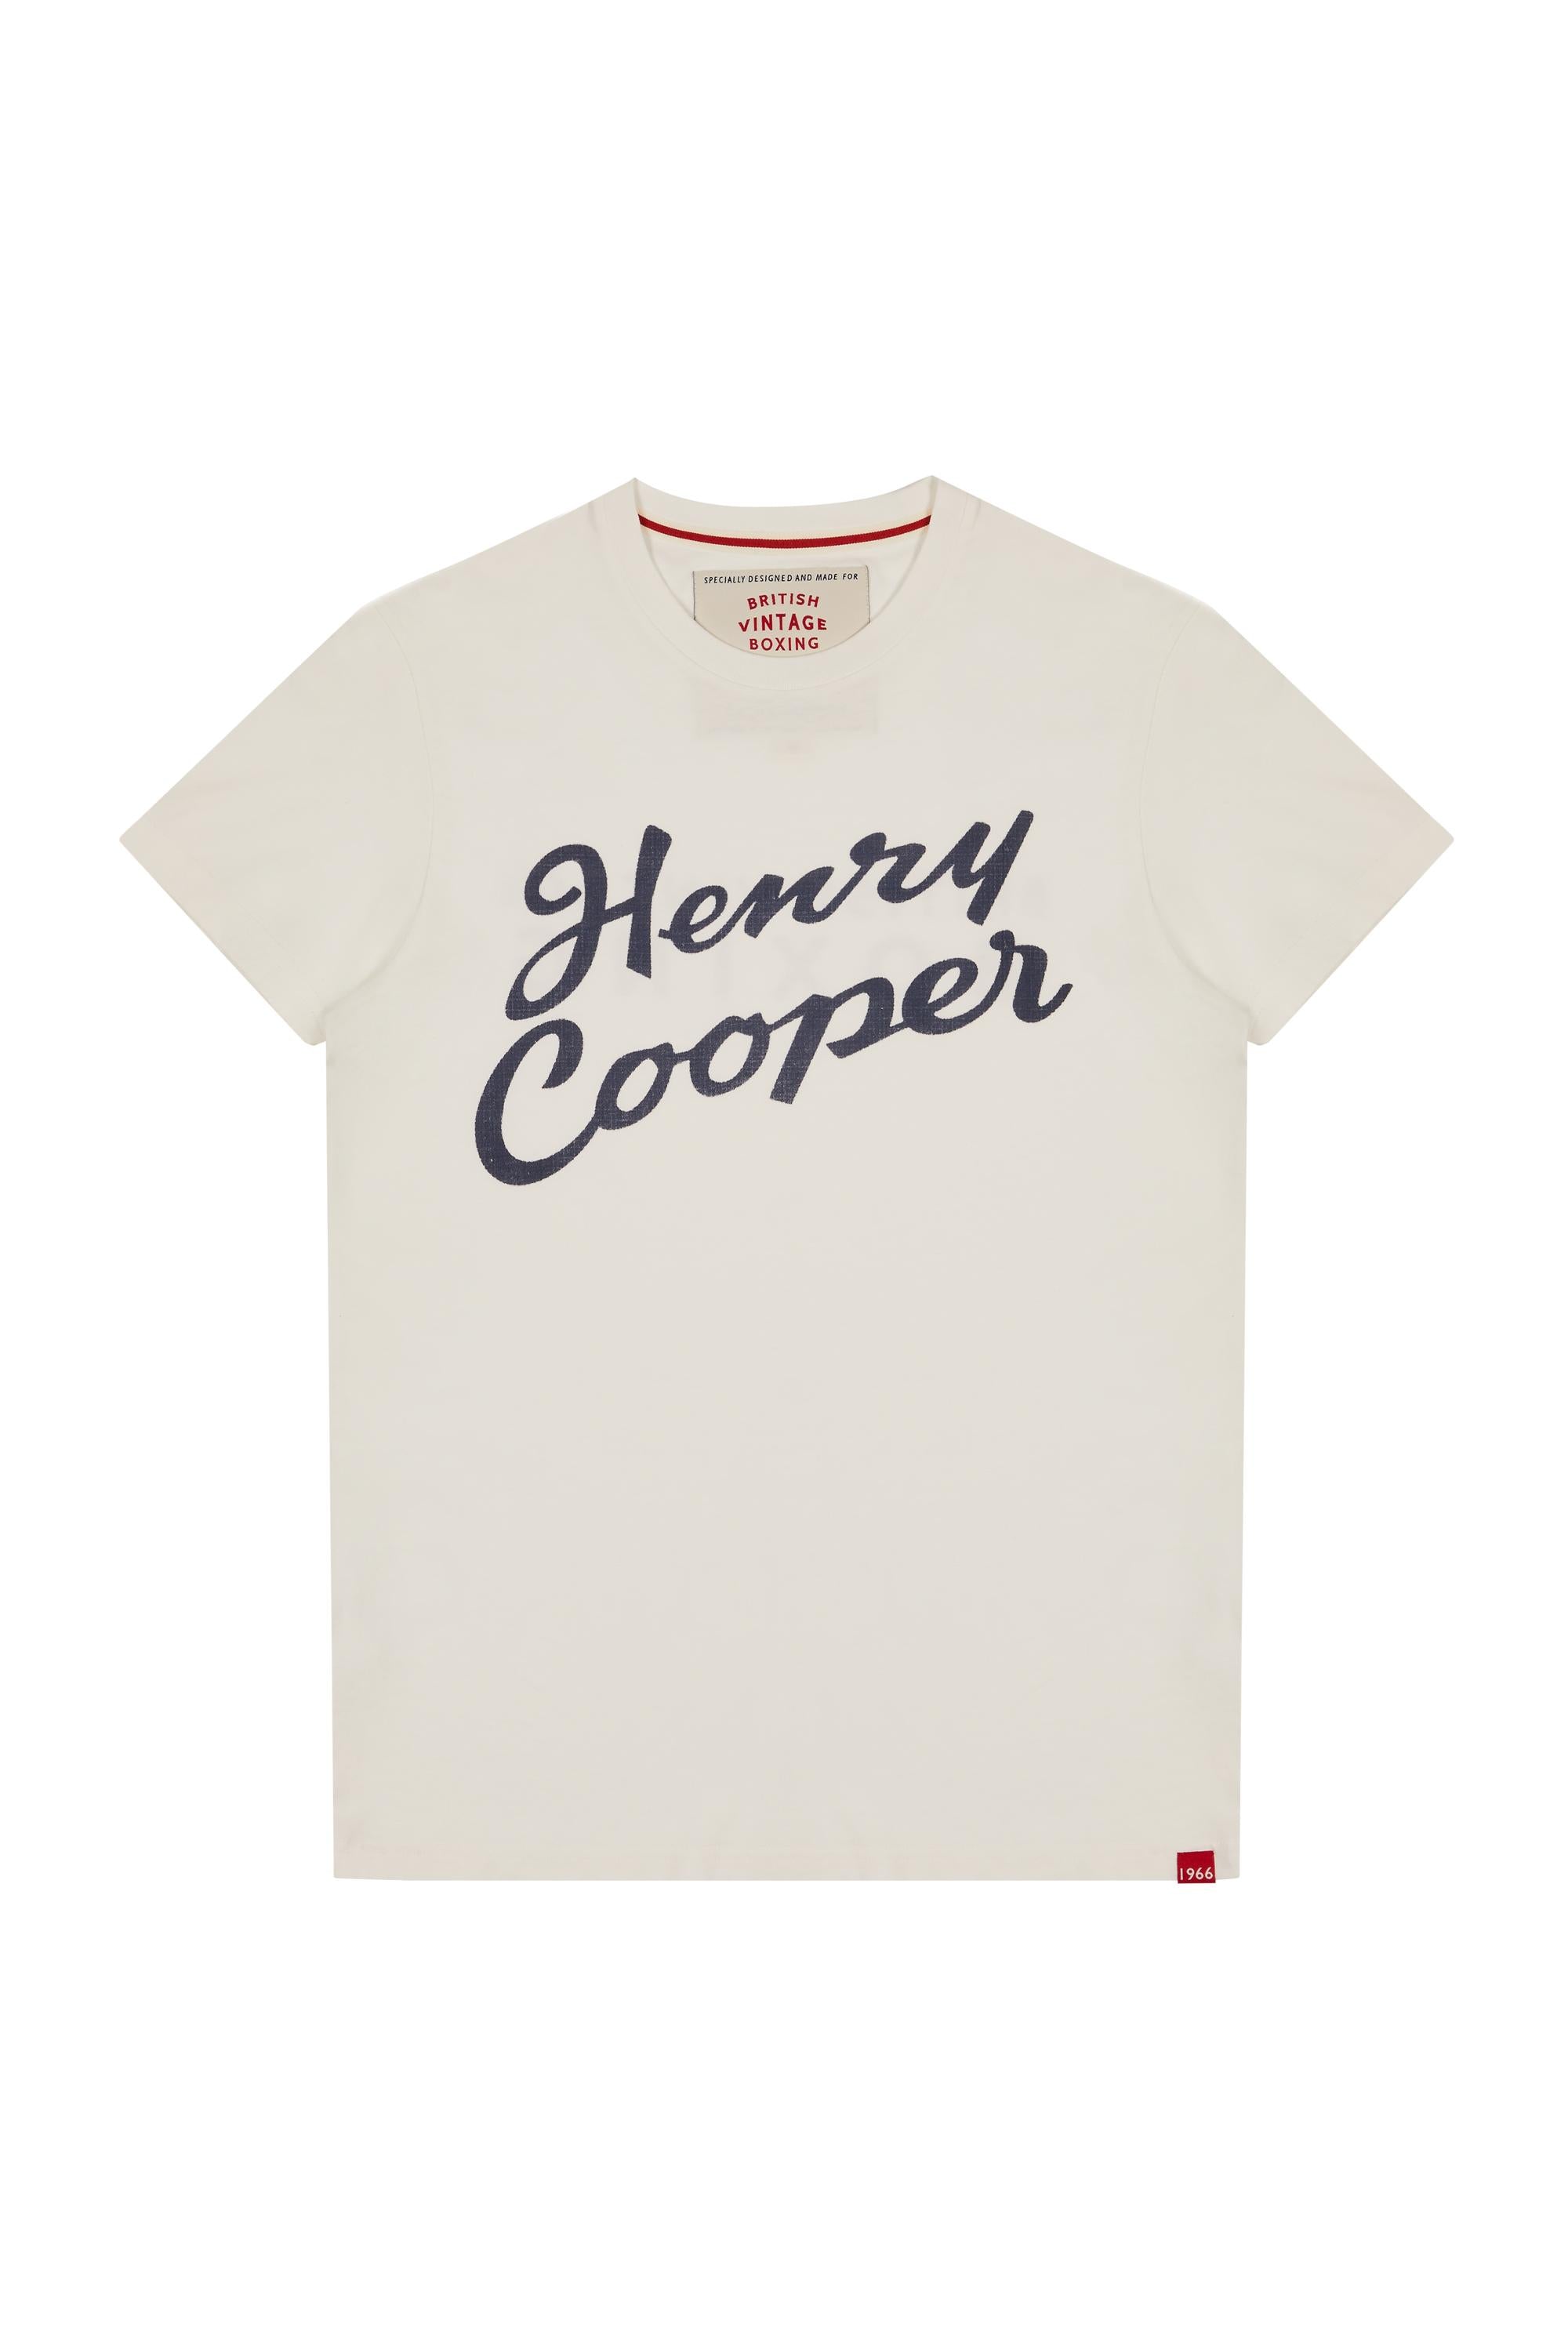 HENRY COOPER 1966 TRAINING CAMP T-SHIRT